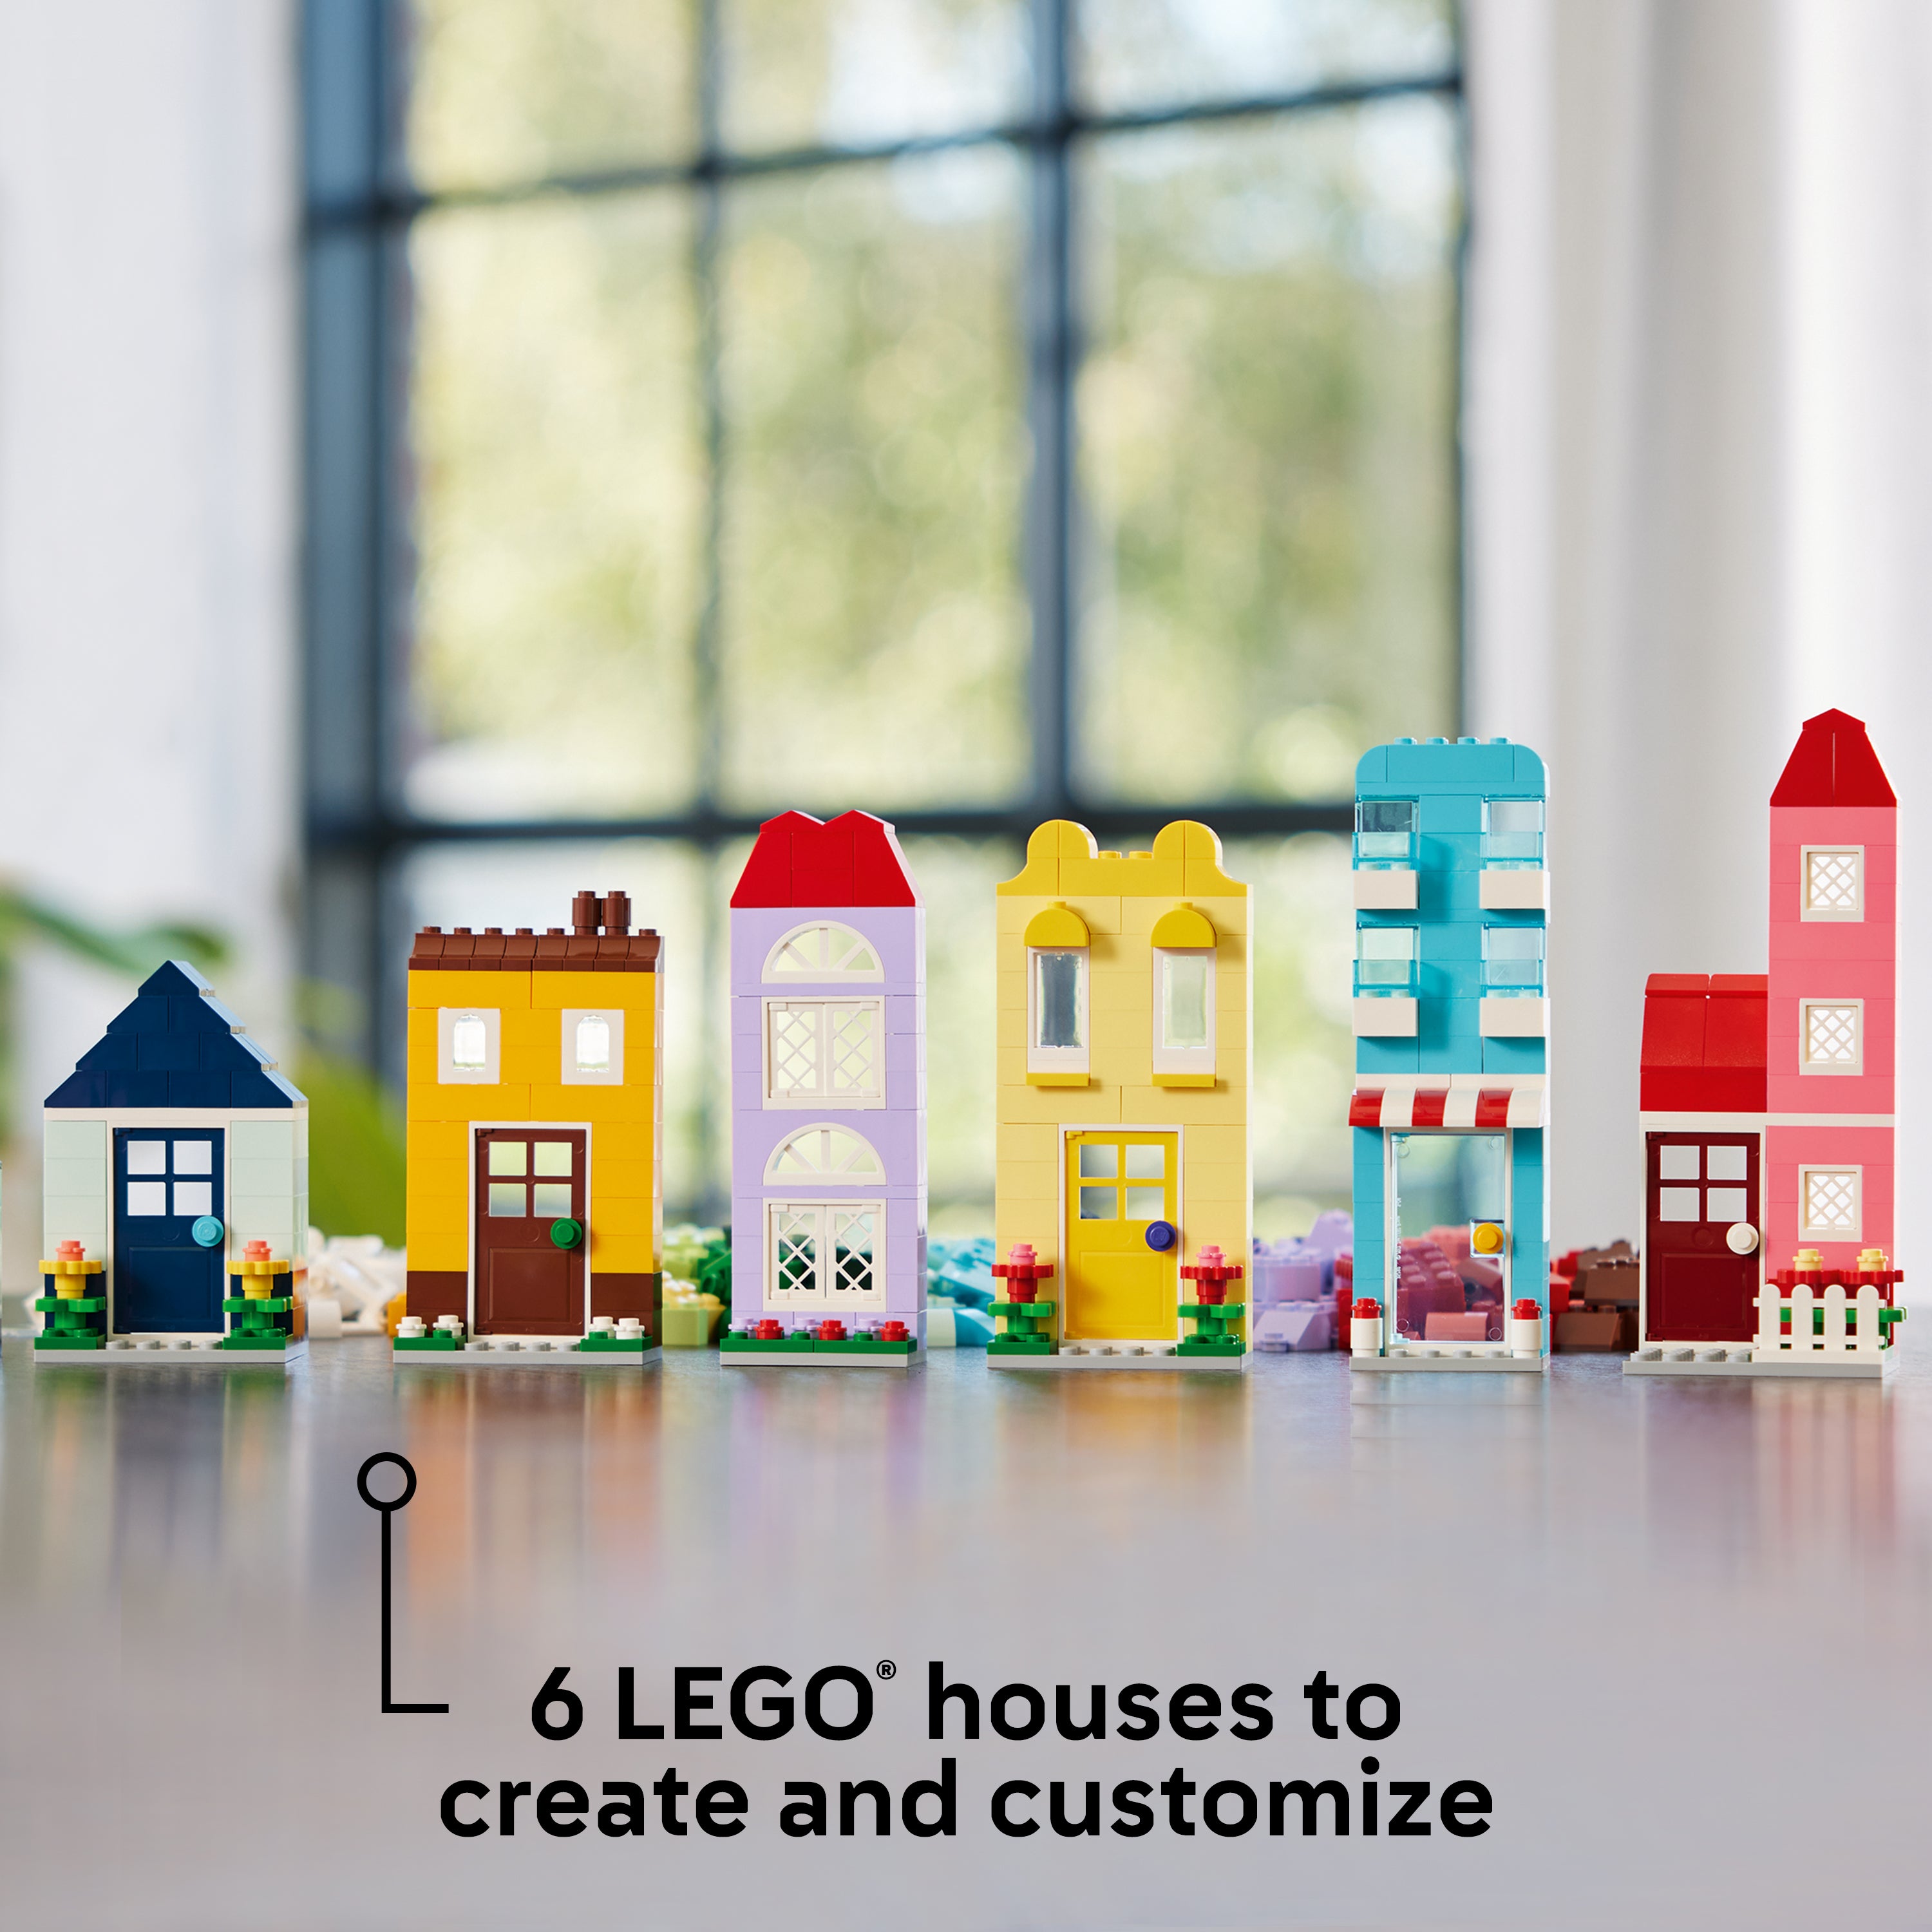 Lego 11035 Creative Houses